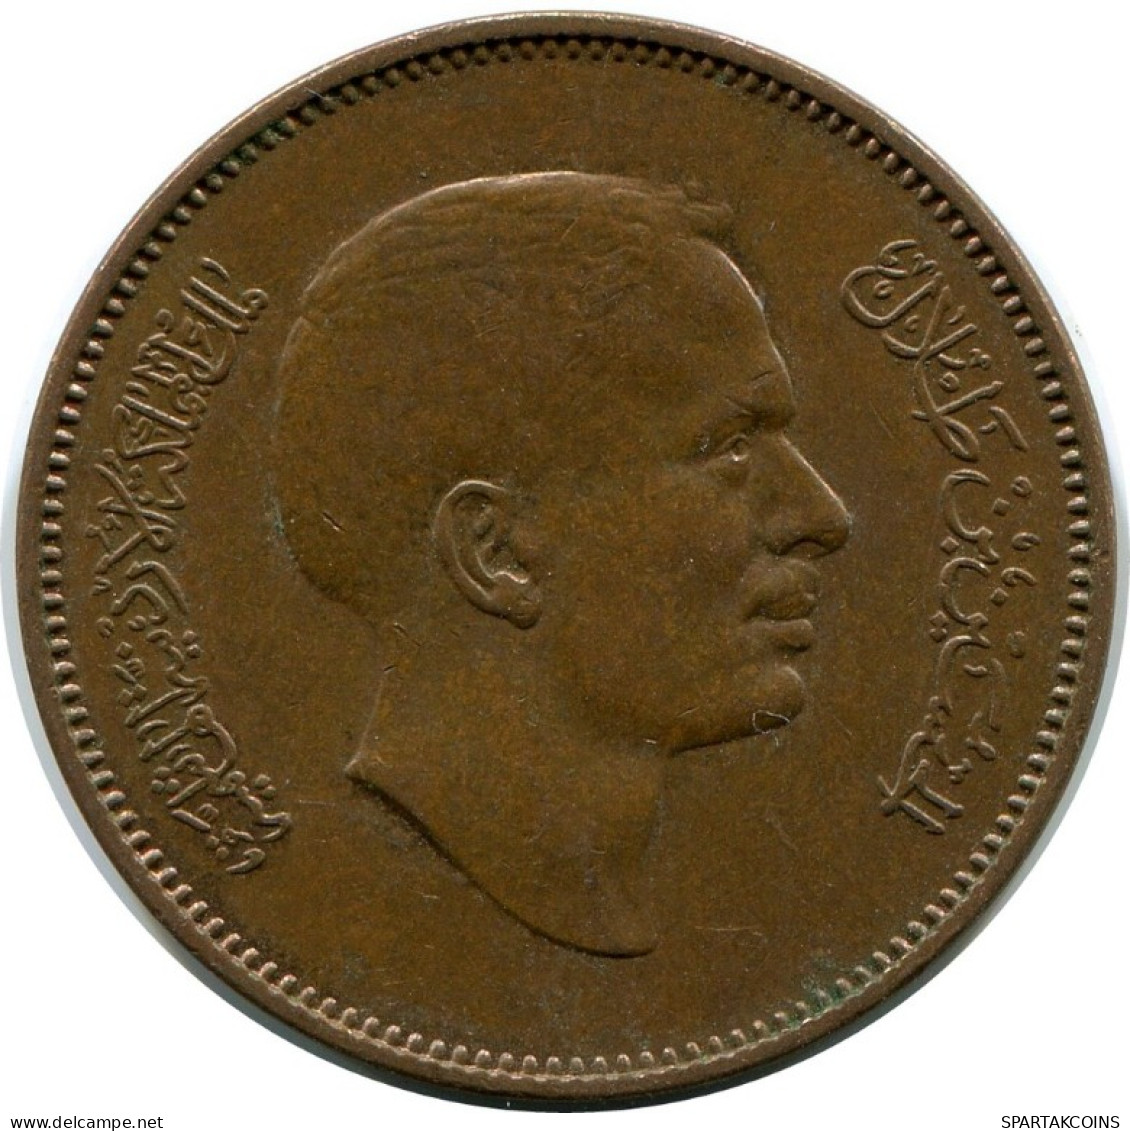 5 FILS 1975 JORDAN Islamic Coin #AK152.U.A - Jordan